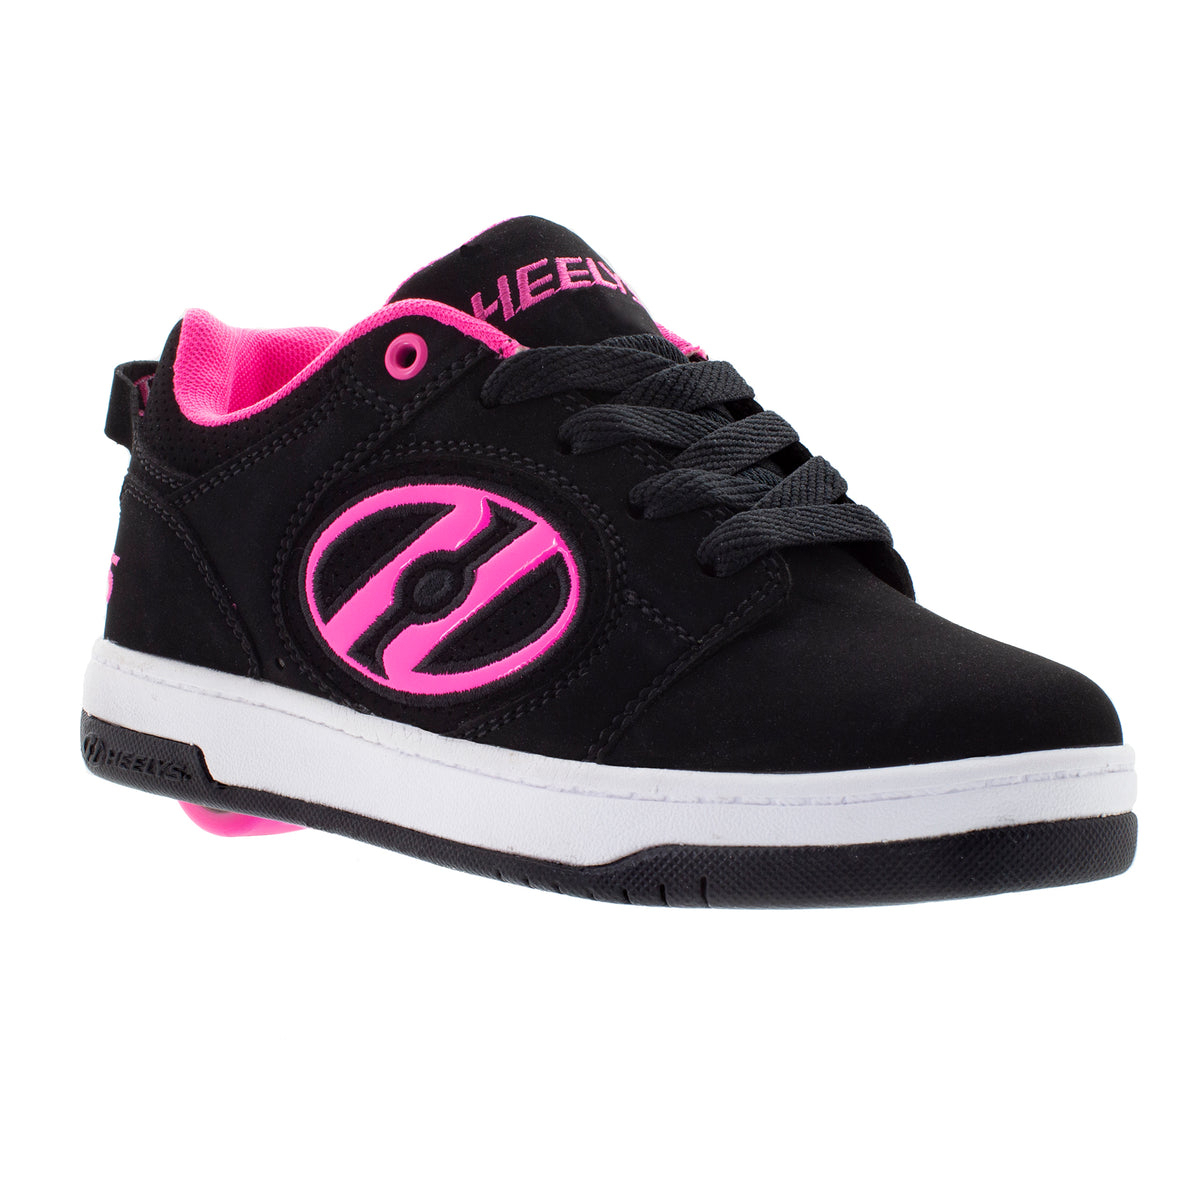 HEELYS Unisex Kids' Voyager Wheeled Shoe Black/Pink - HE100714H BLACK/PINK - BLACK/PINK, 4